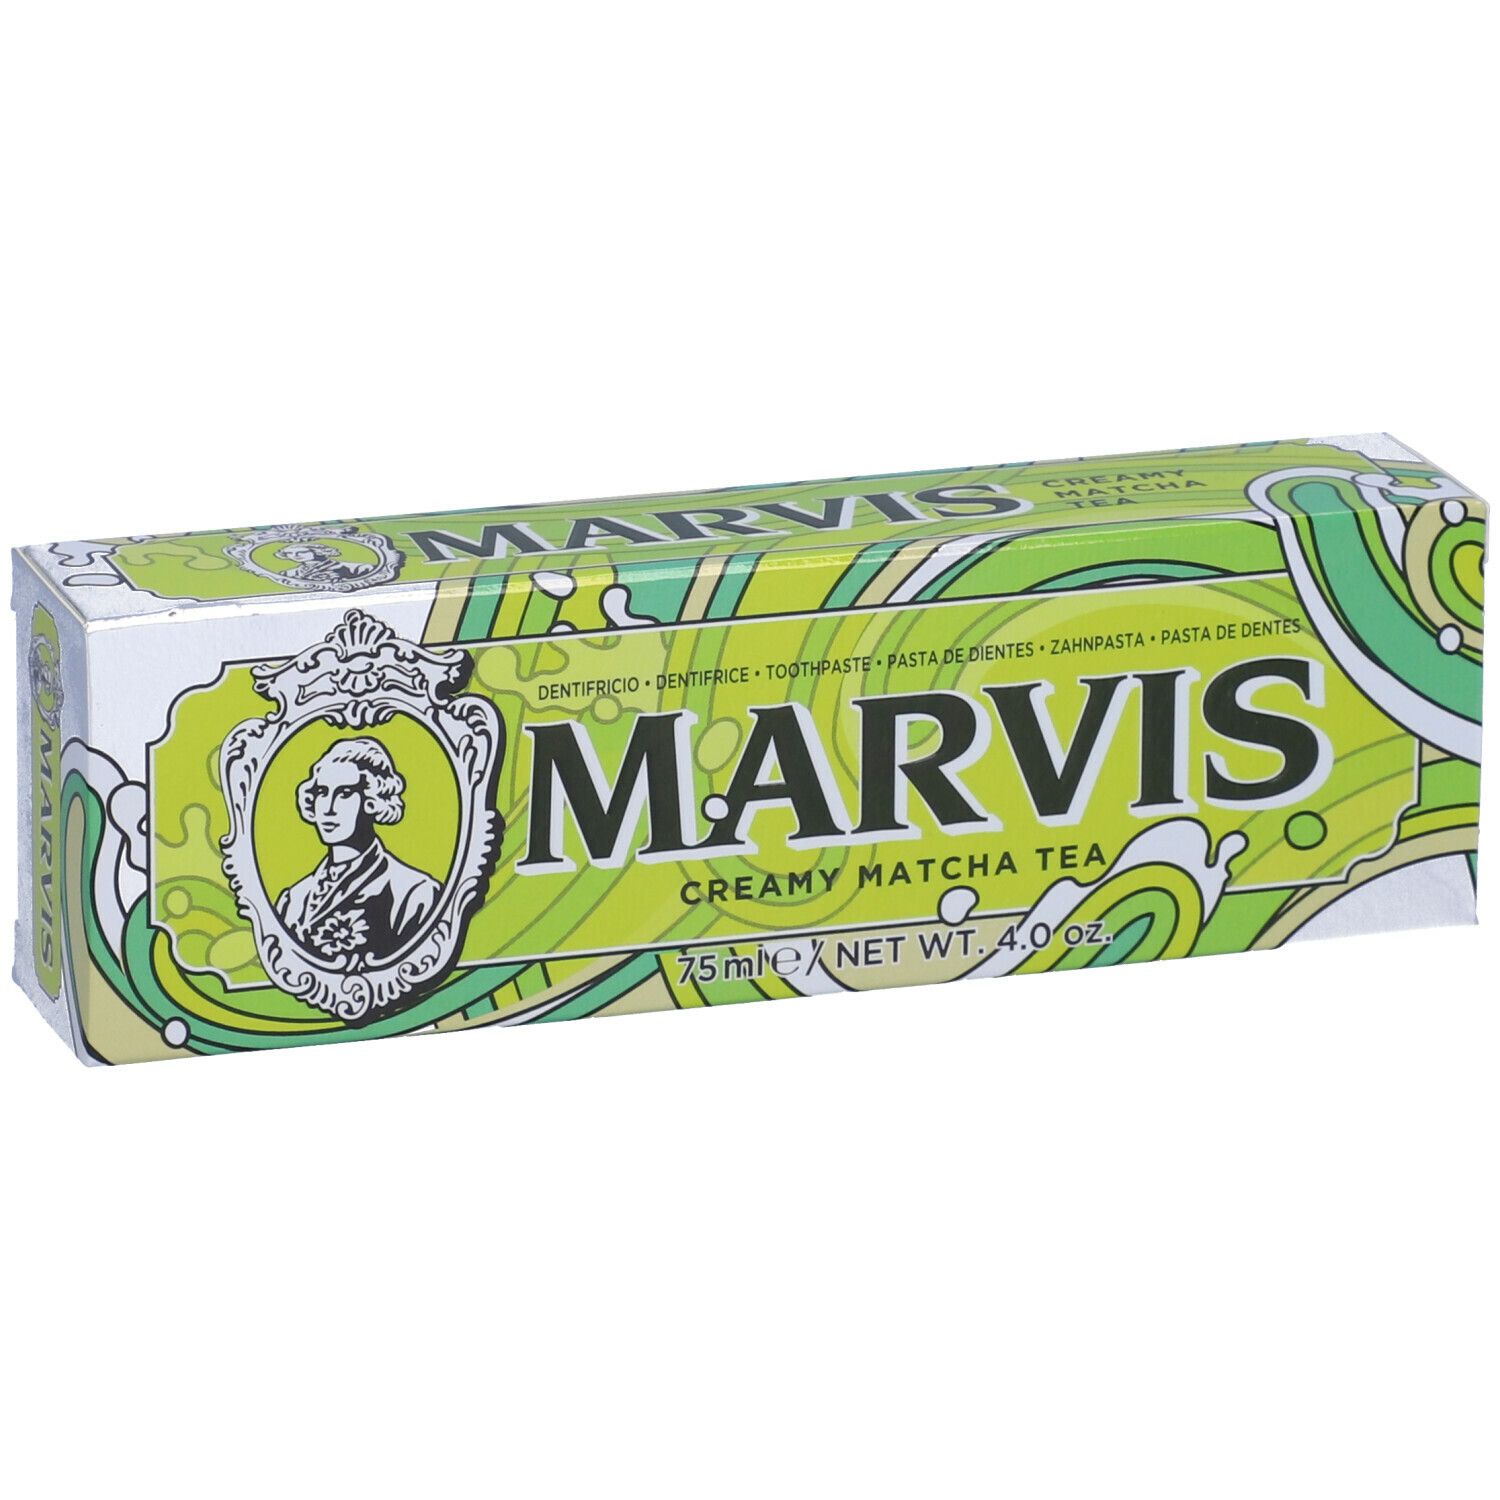 MARVIS Creamy Matcha Tea